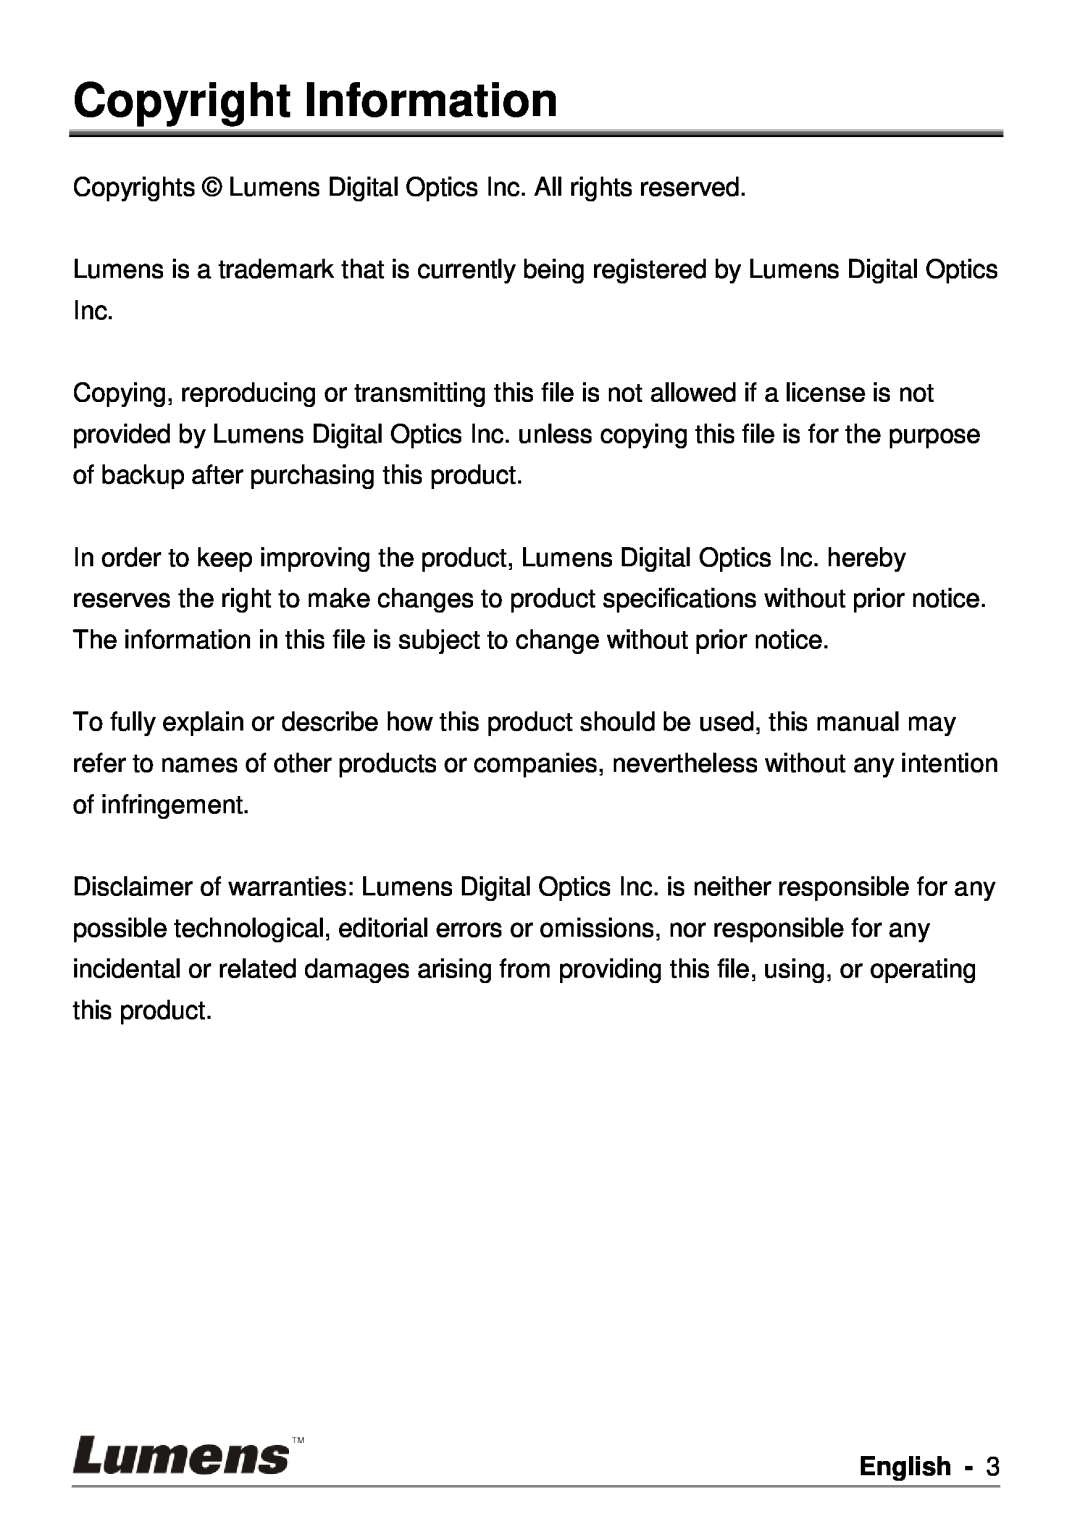 Lumens Technology PS750 user manual Copyright Information, English 